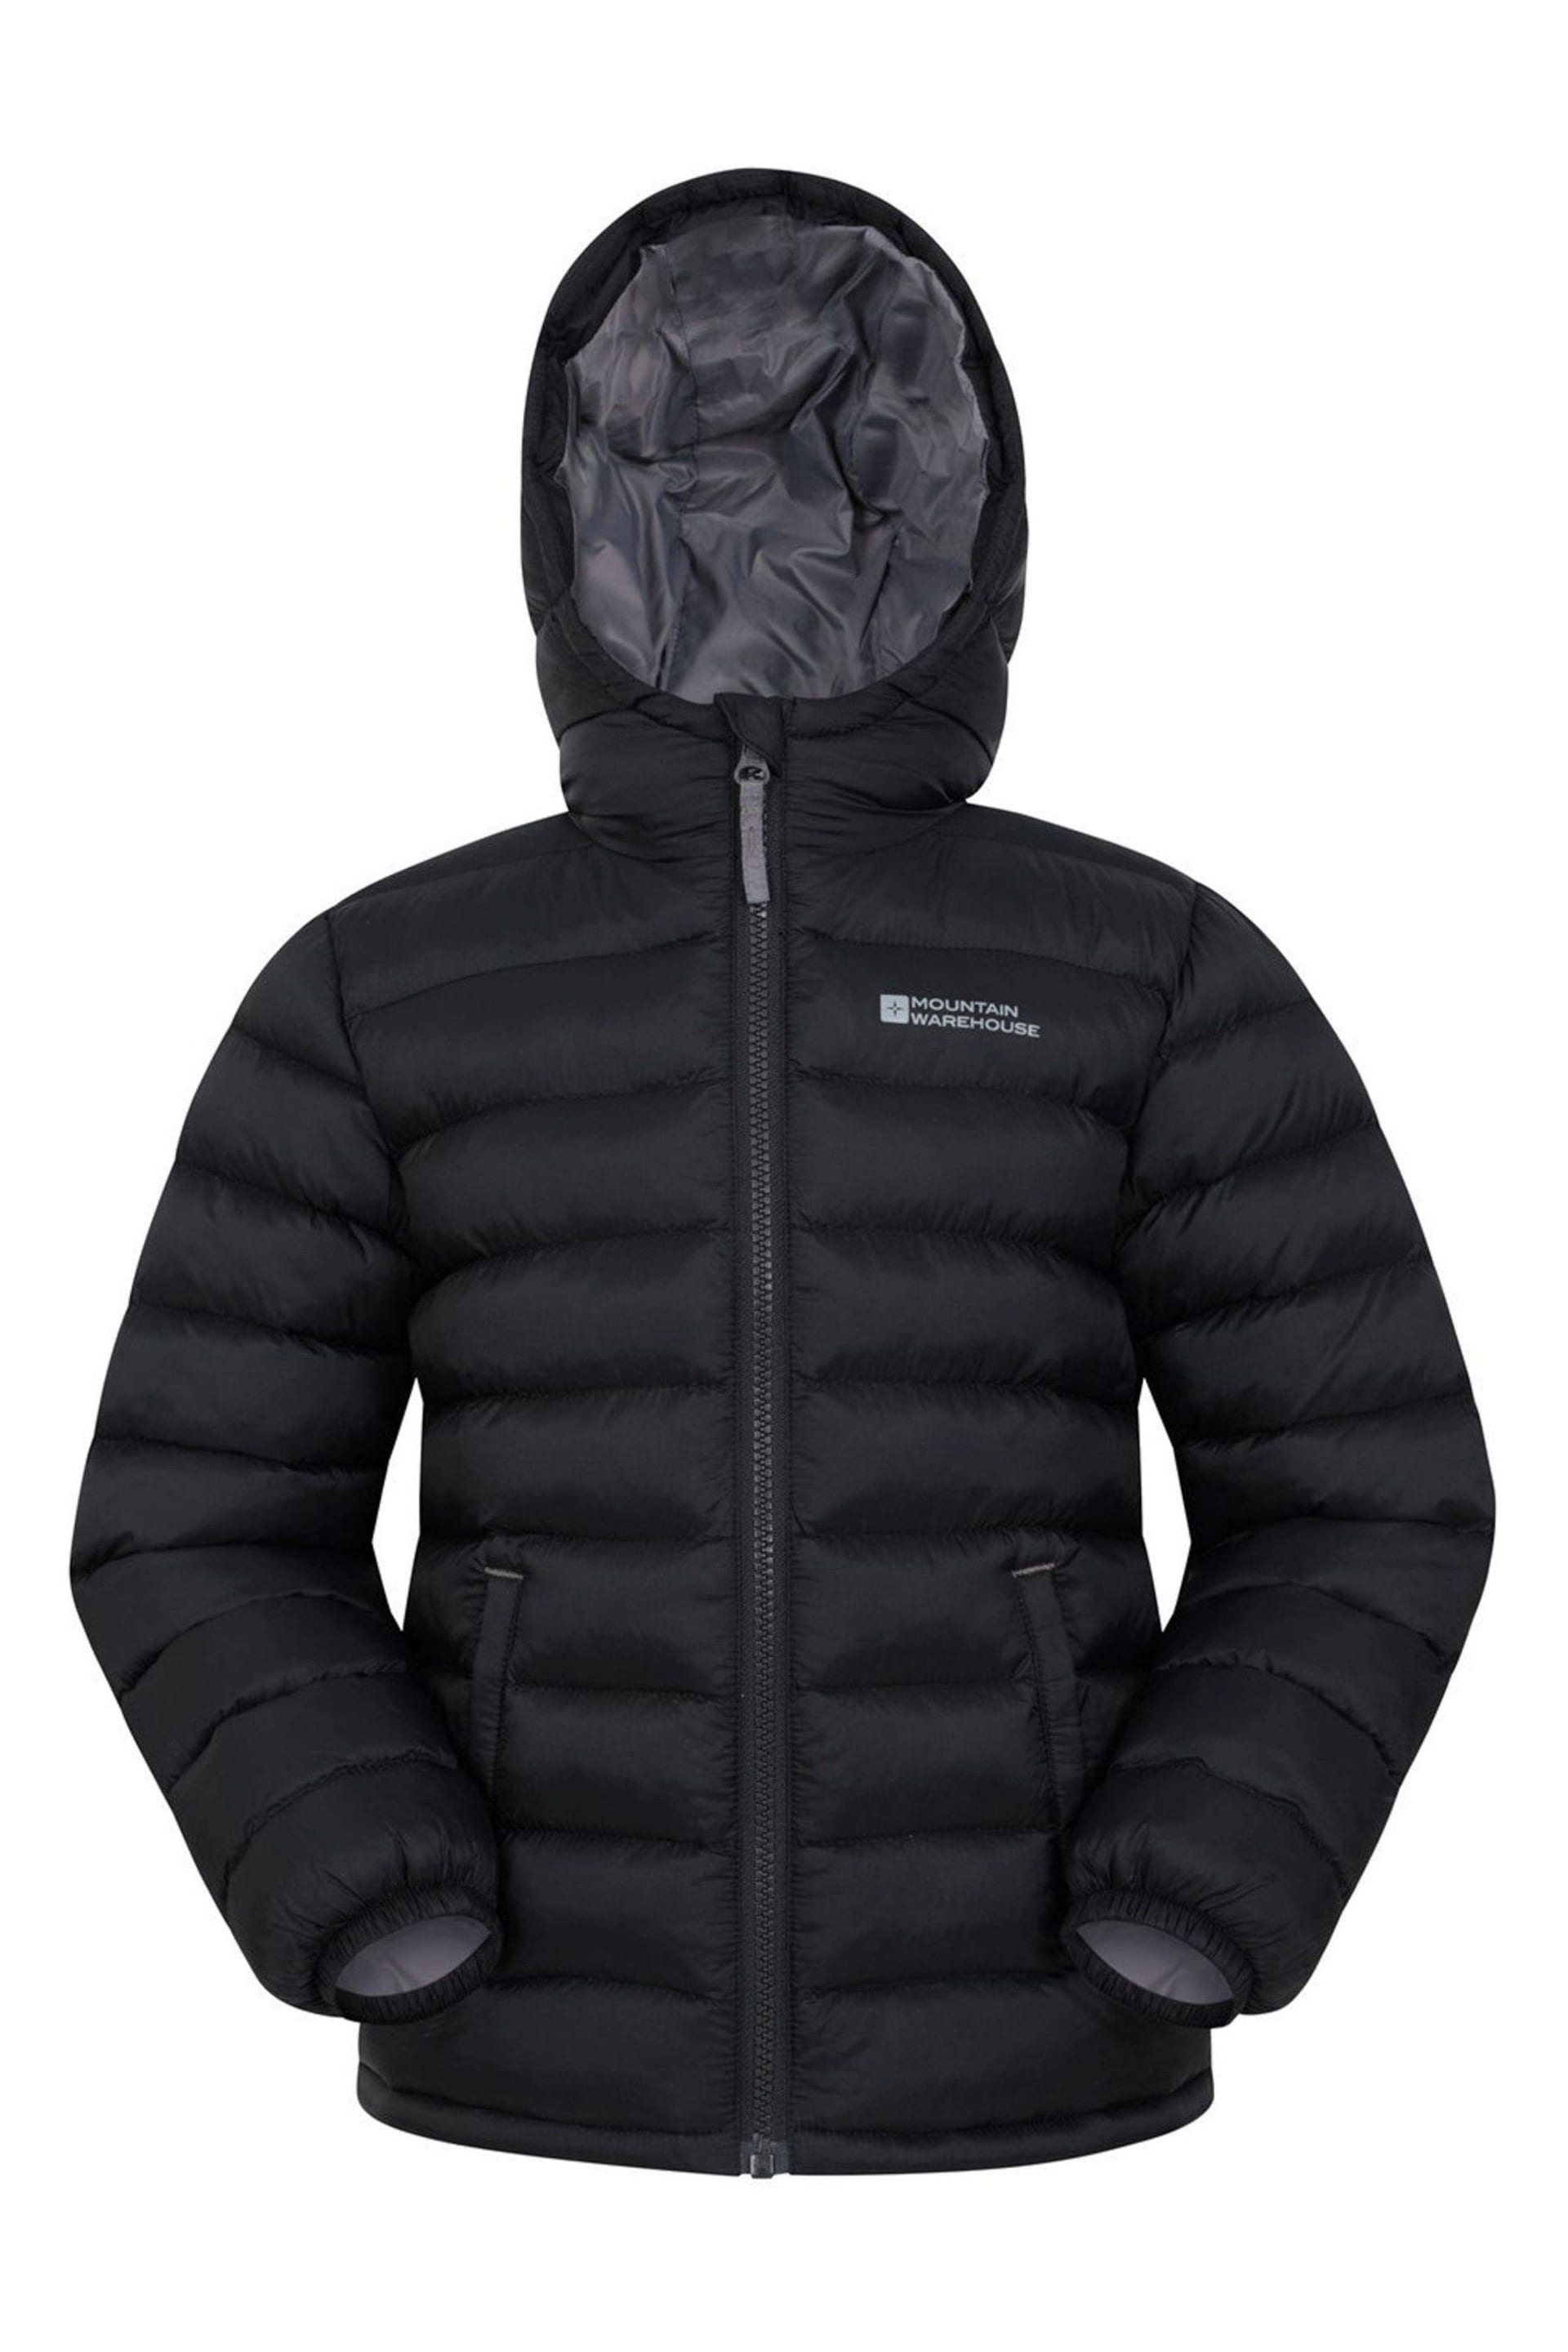 Mountain Warehouse Black Seasons Water Resistant Padded Jacket - Image 1 of 2